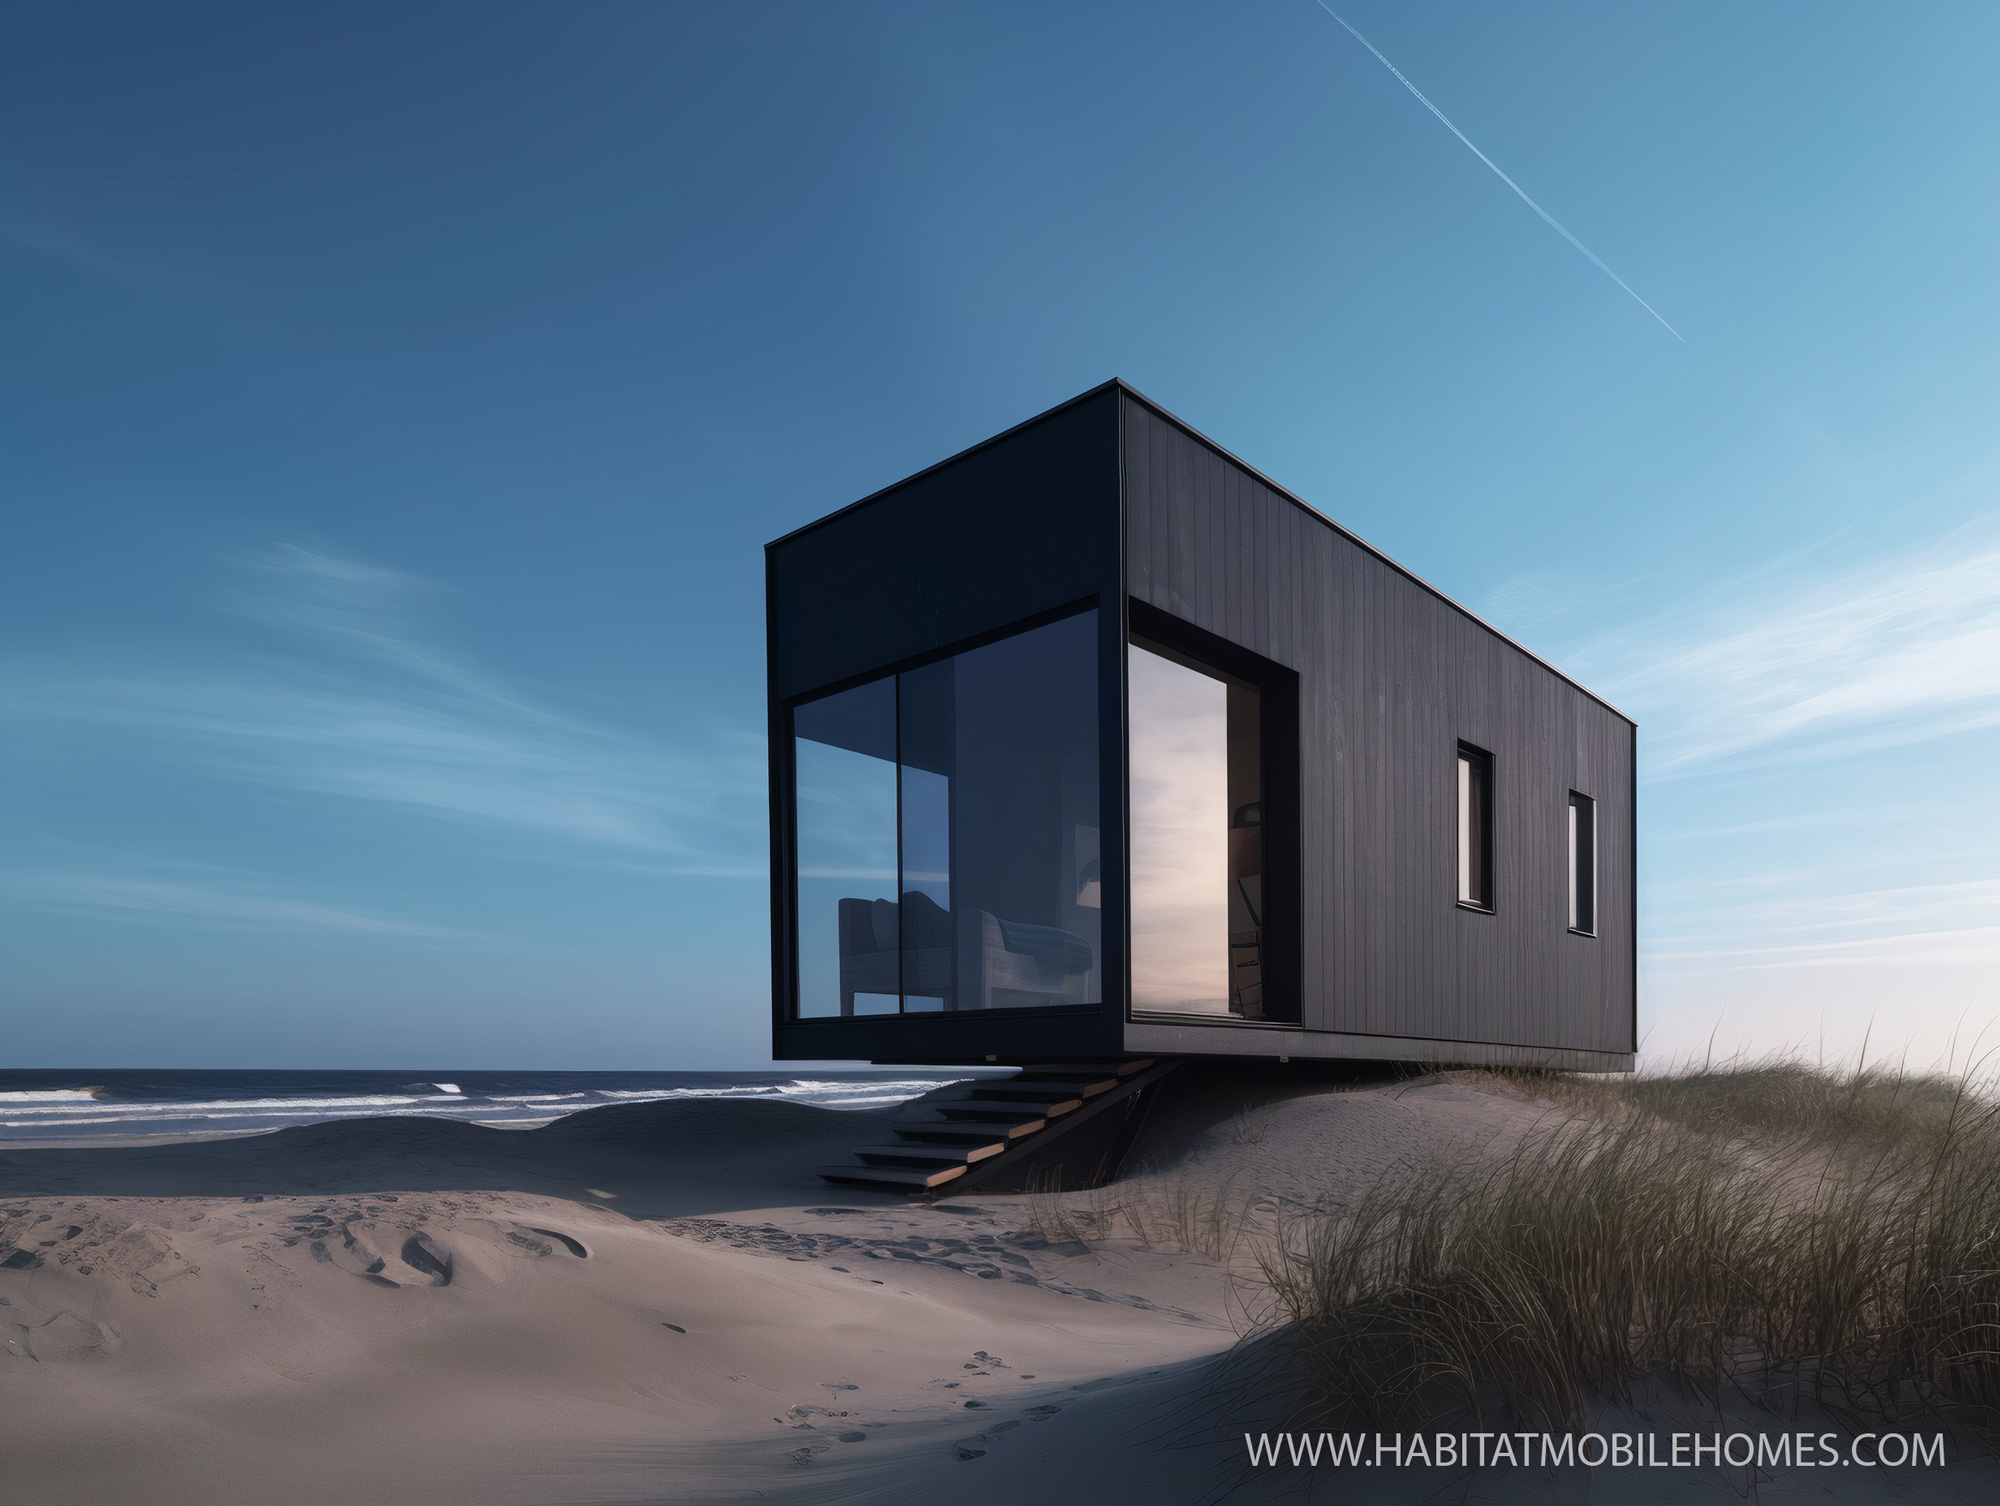 Is Habitat a luxury brand? - HOUSE HOUSE HOUSE